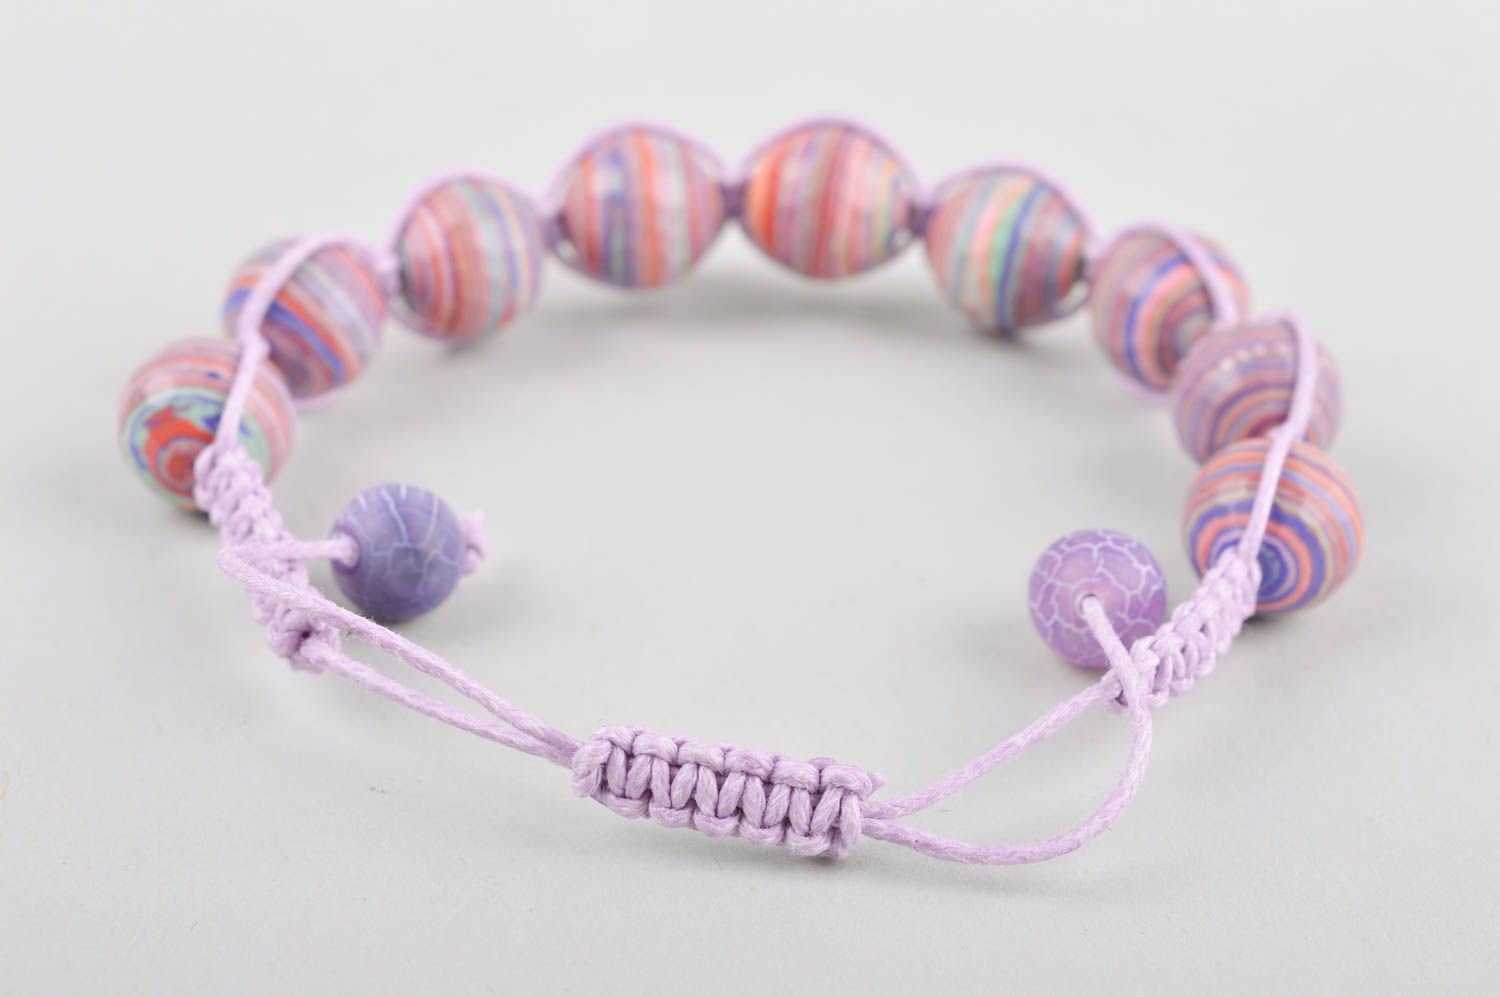 Unique handmade purple rope striped beads bracelet for women photo 4